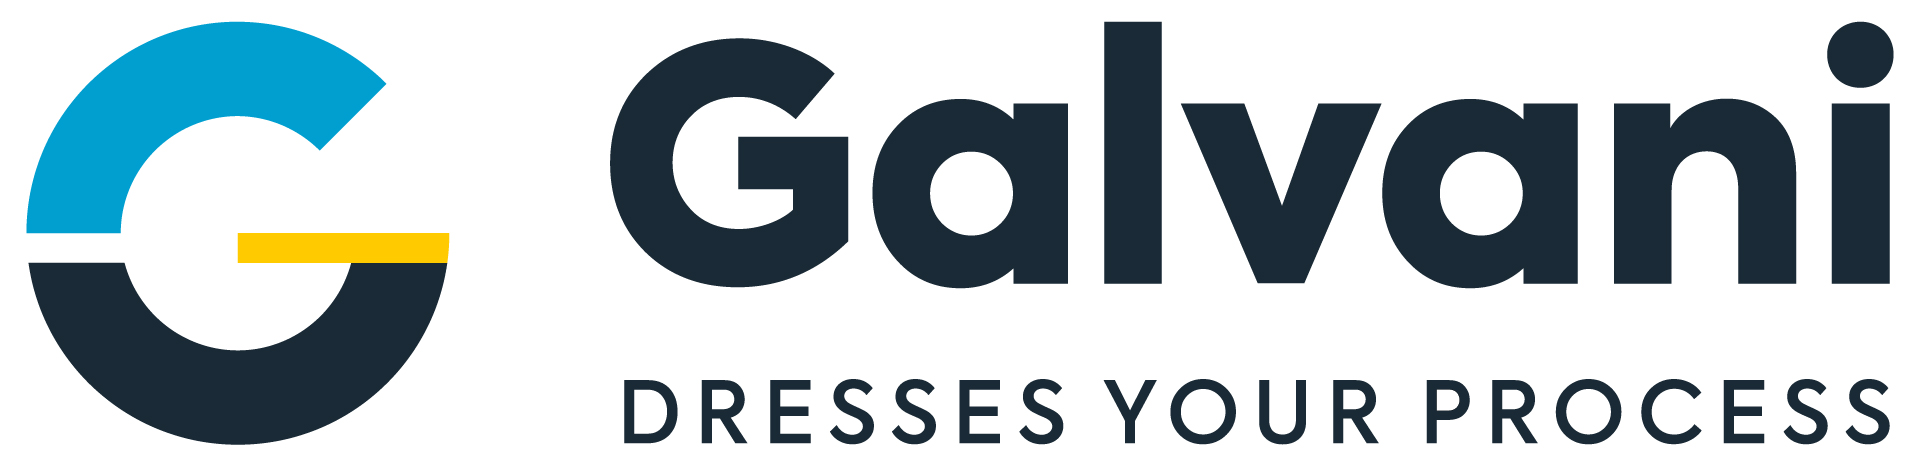 Galvani logo pulito